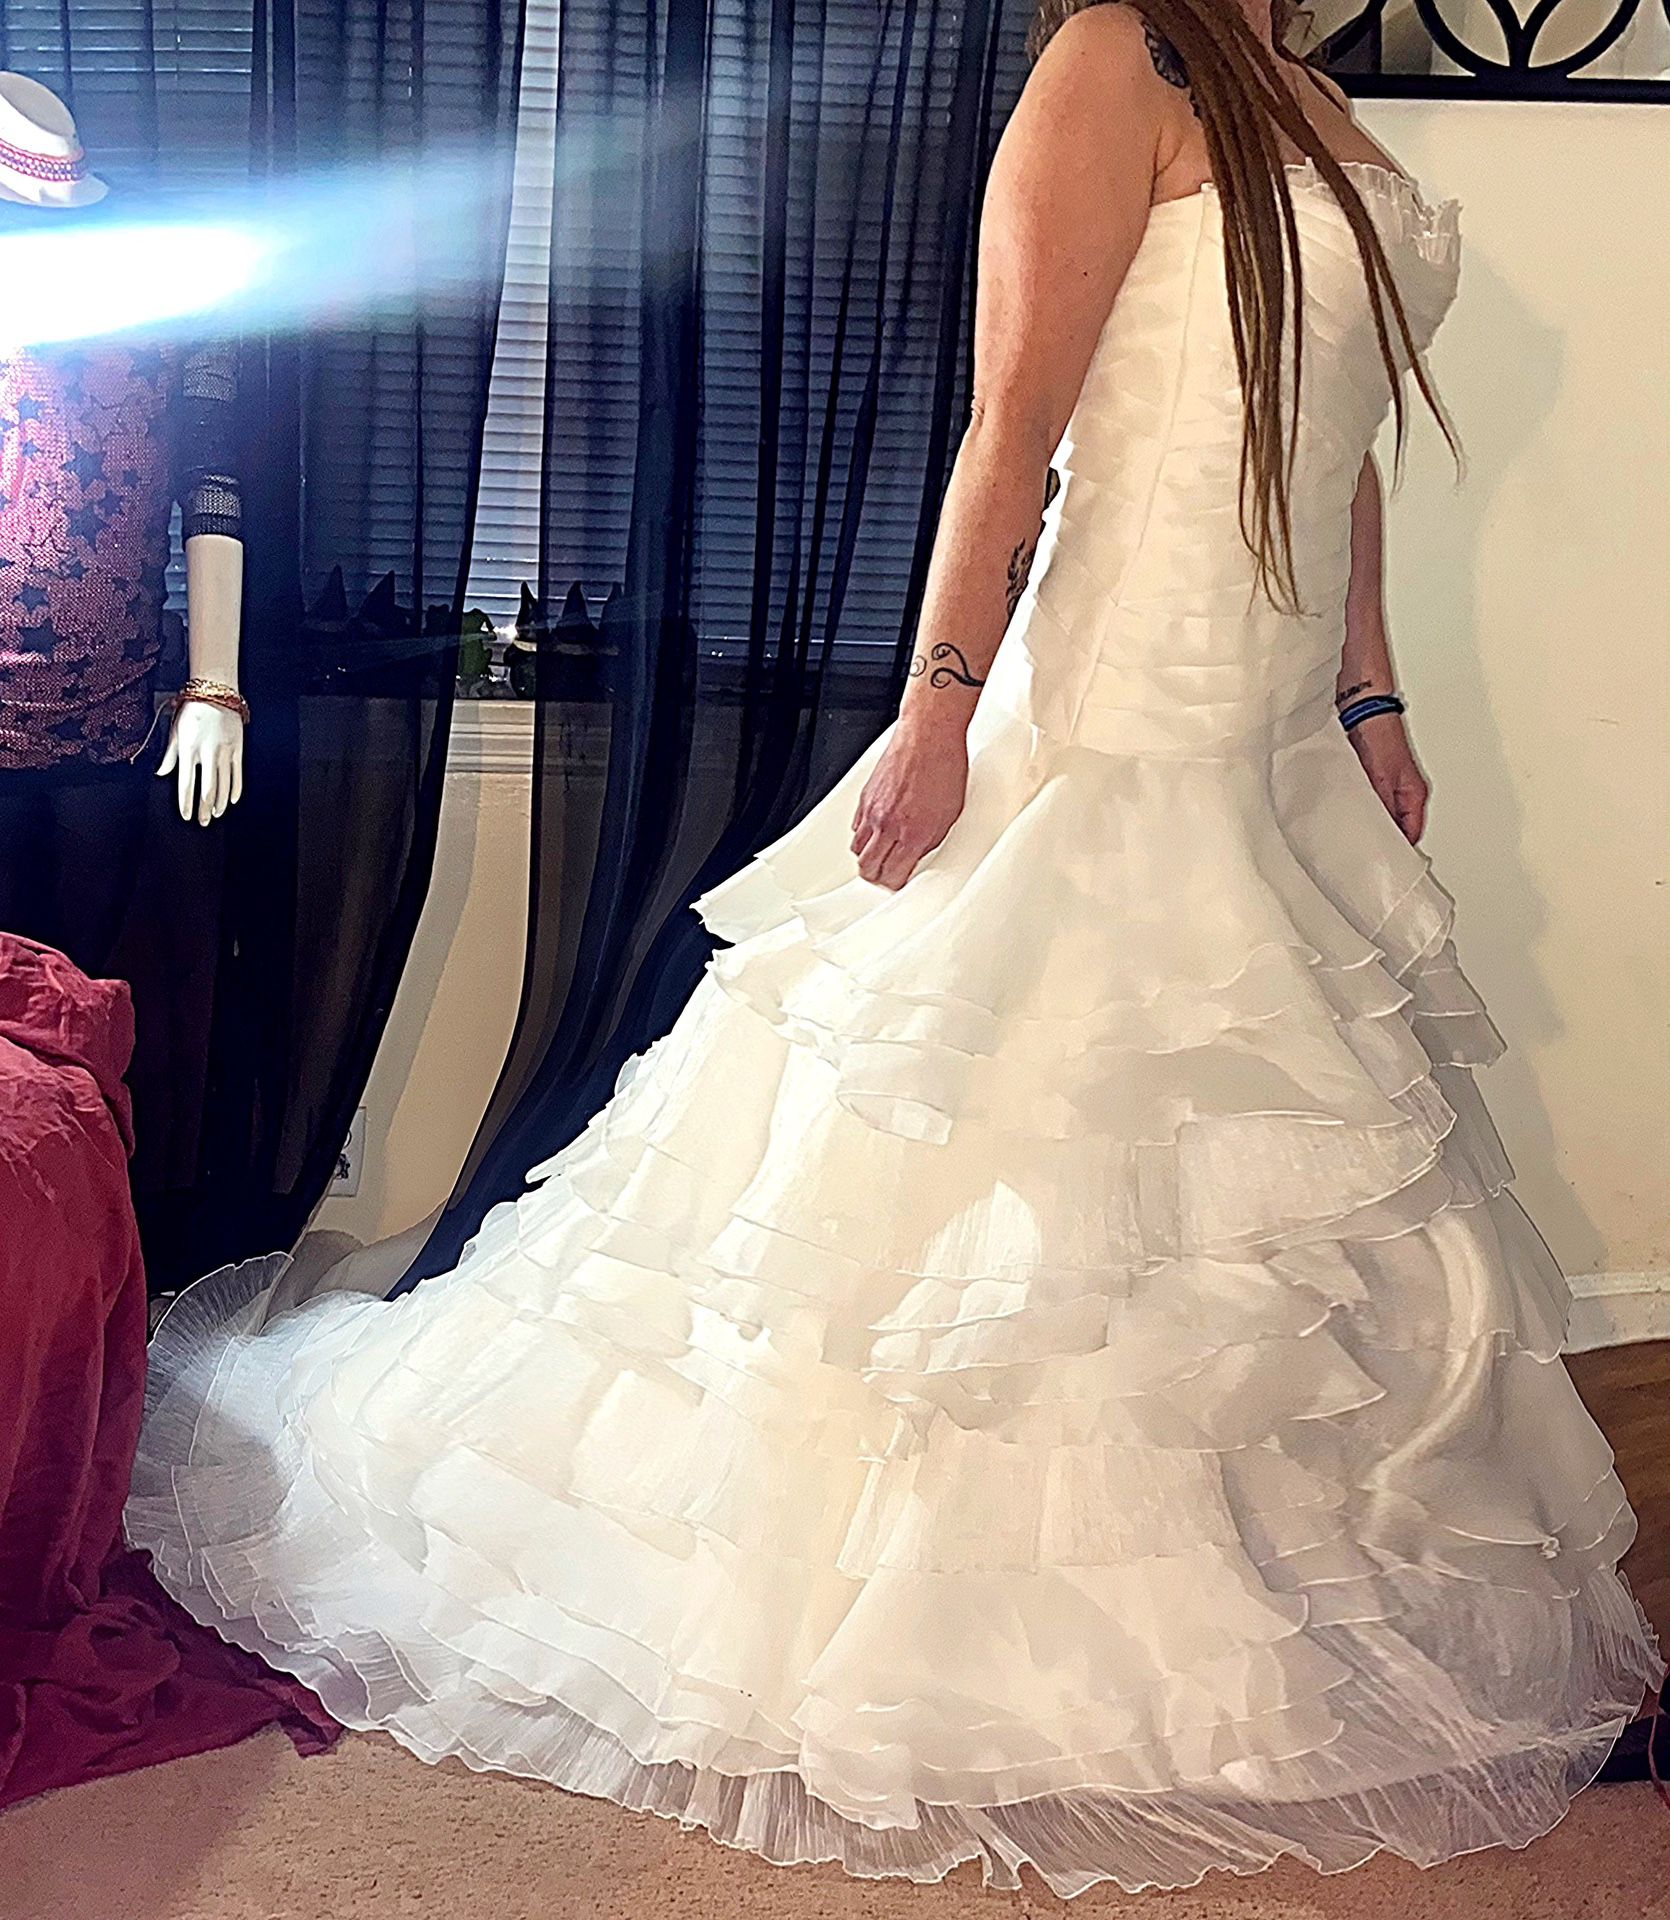 NWT Wedding Dress David’s Bridal Size 4 Ivory